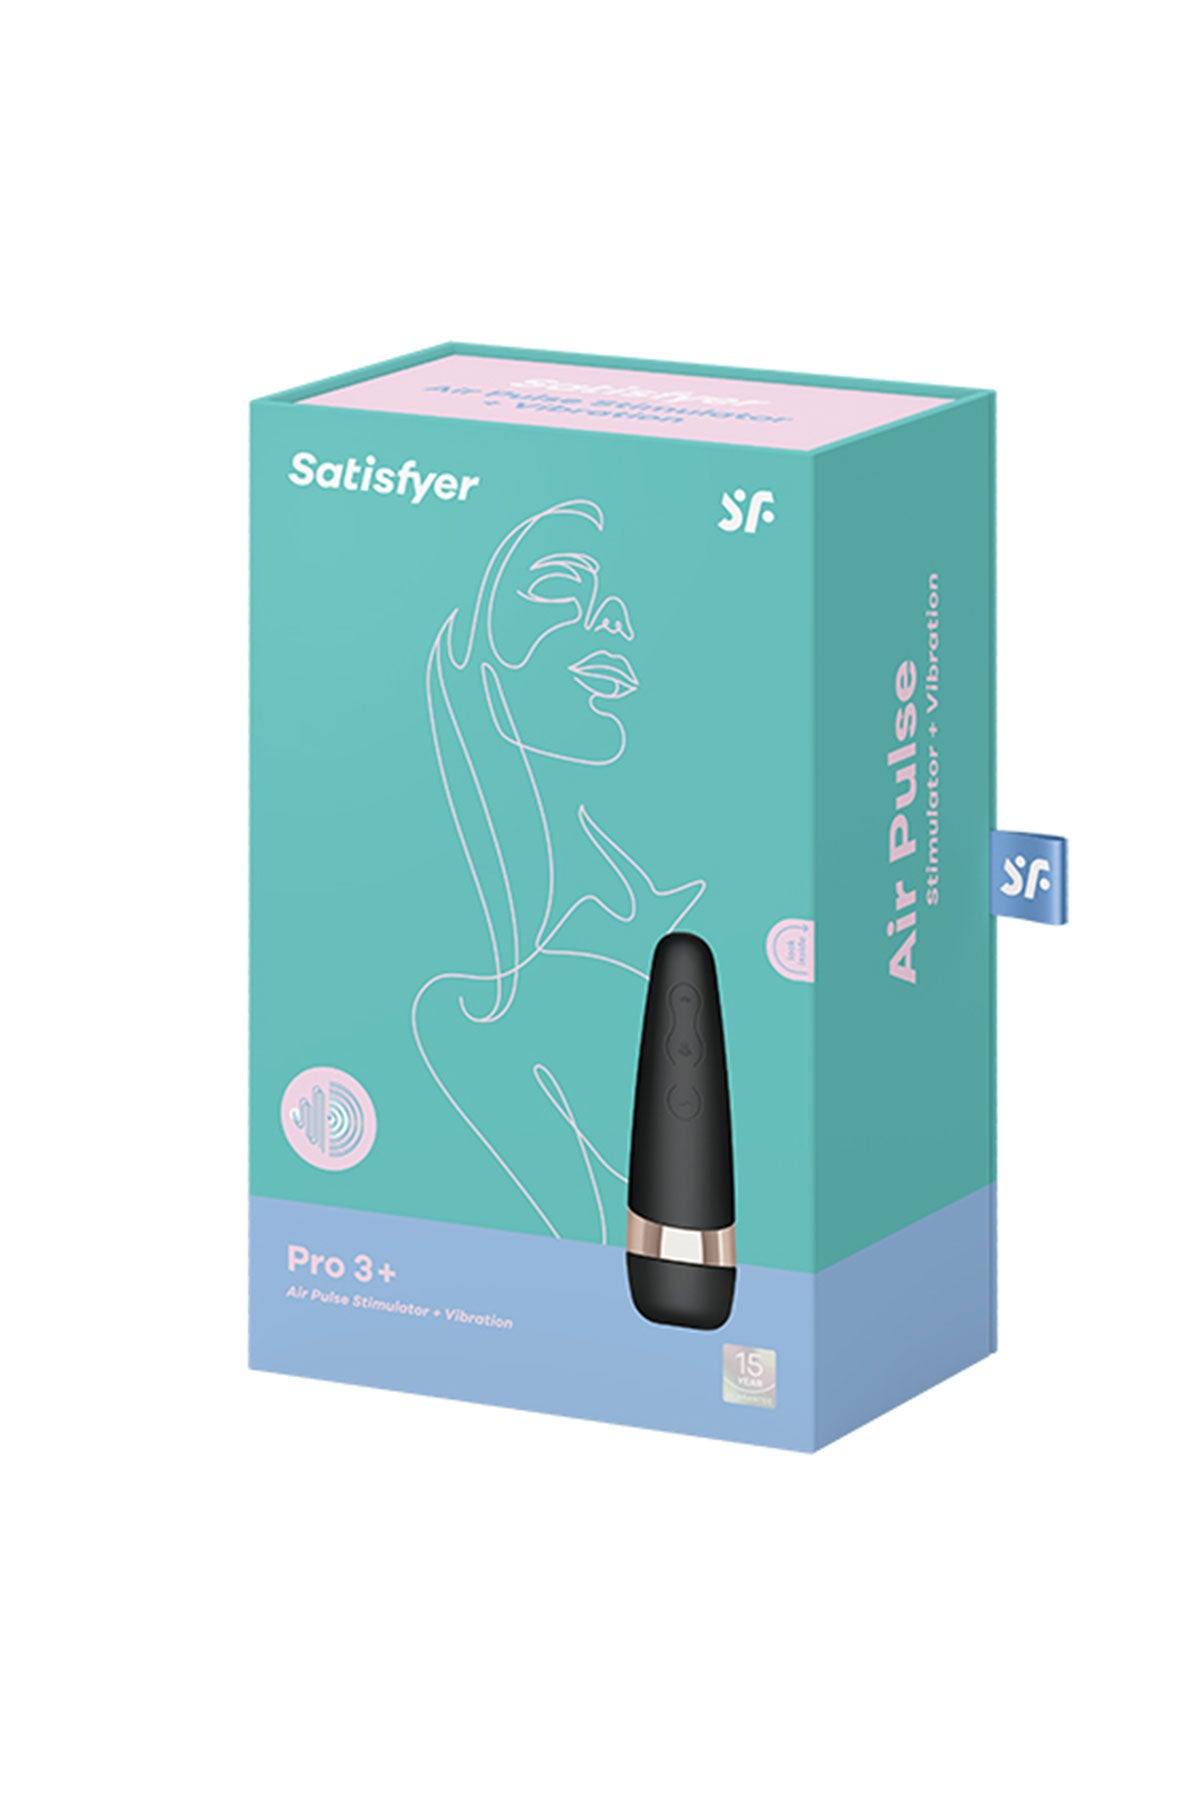 Satisfyer Pro 3+ Clitoral Stimulator Box